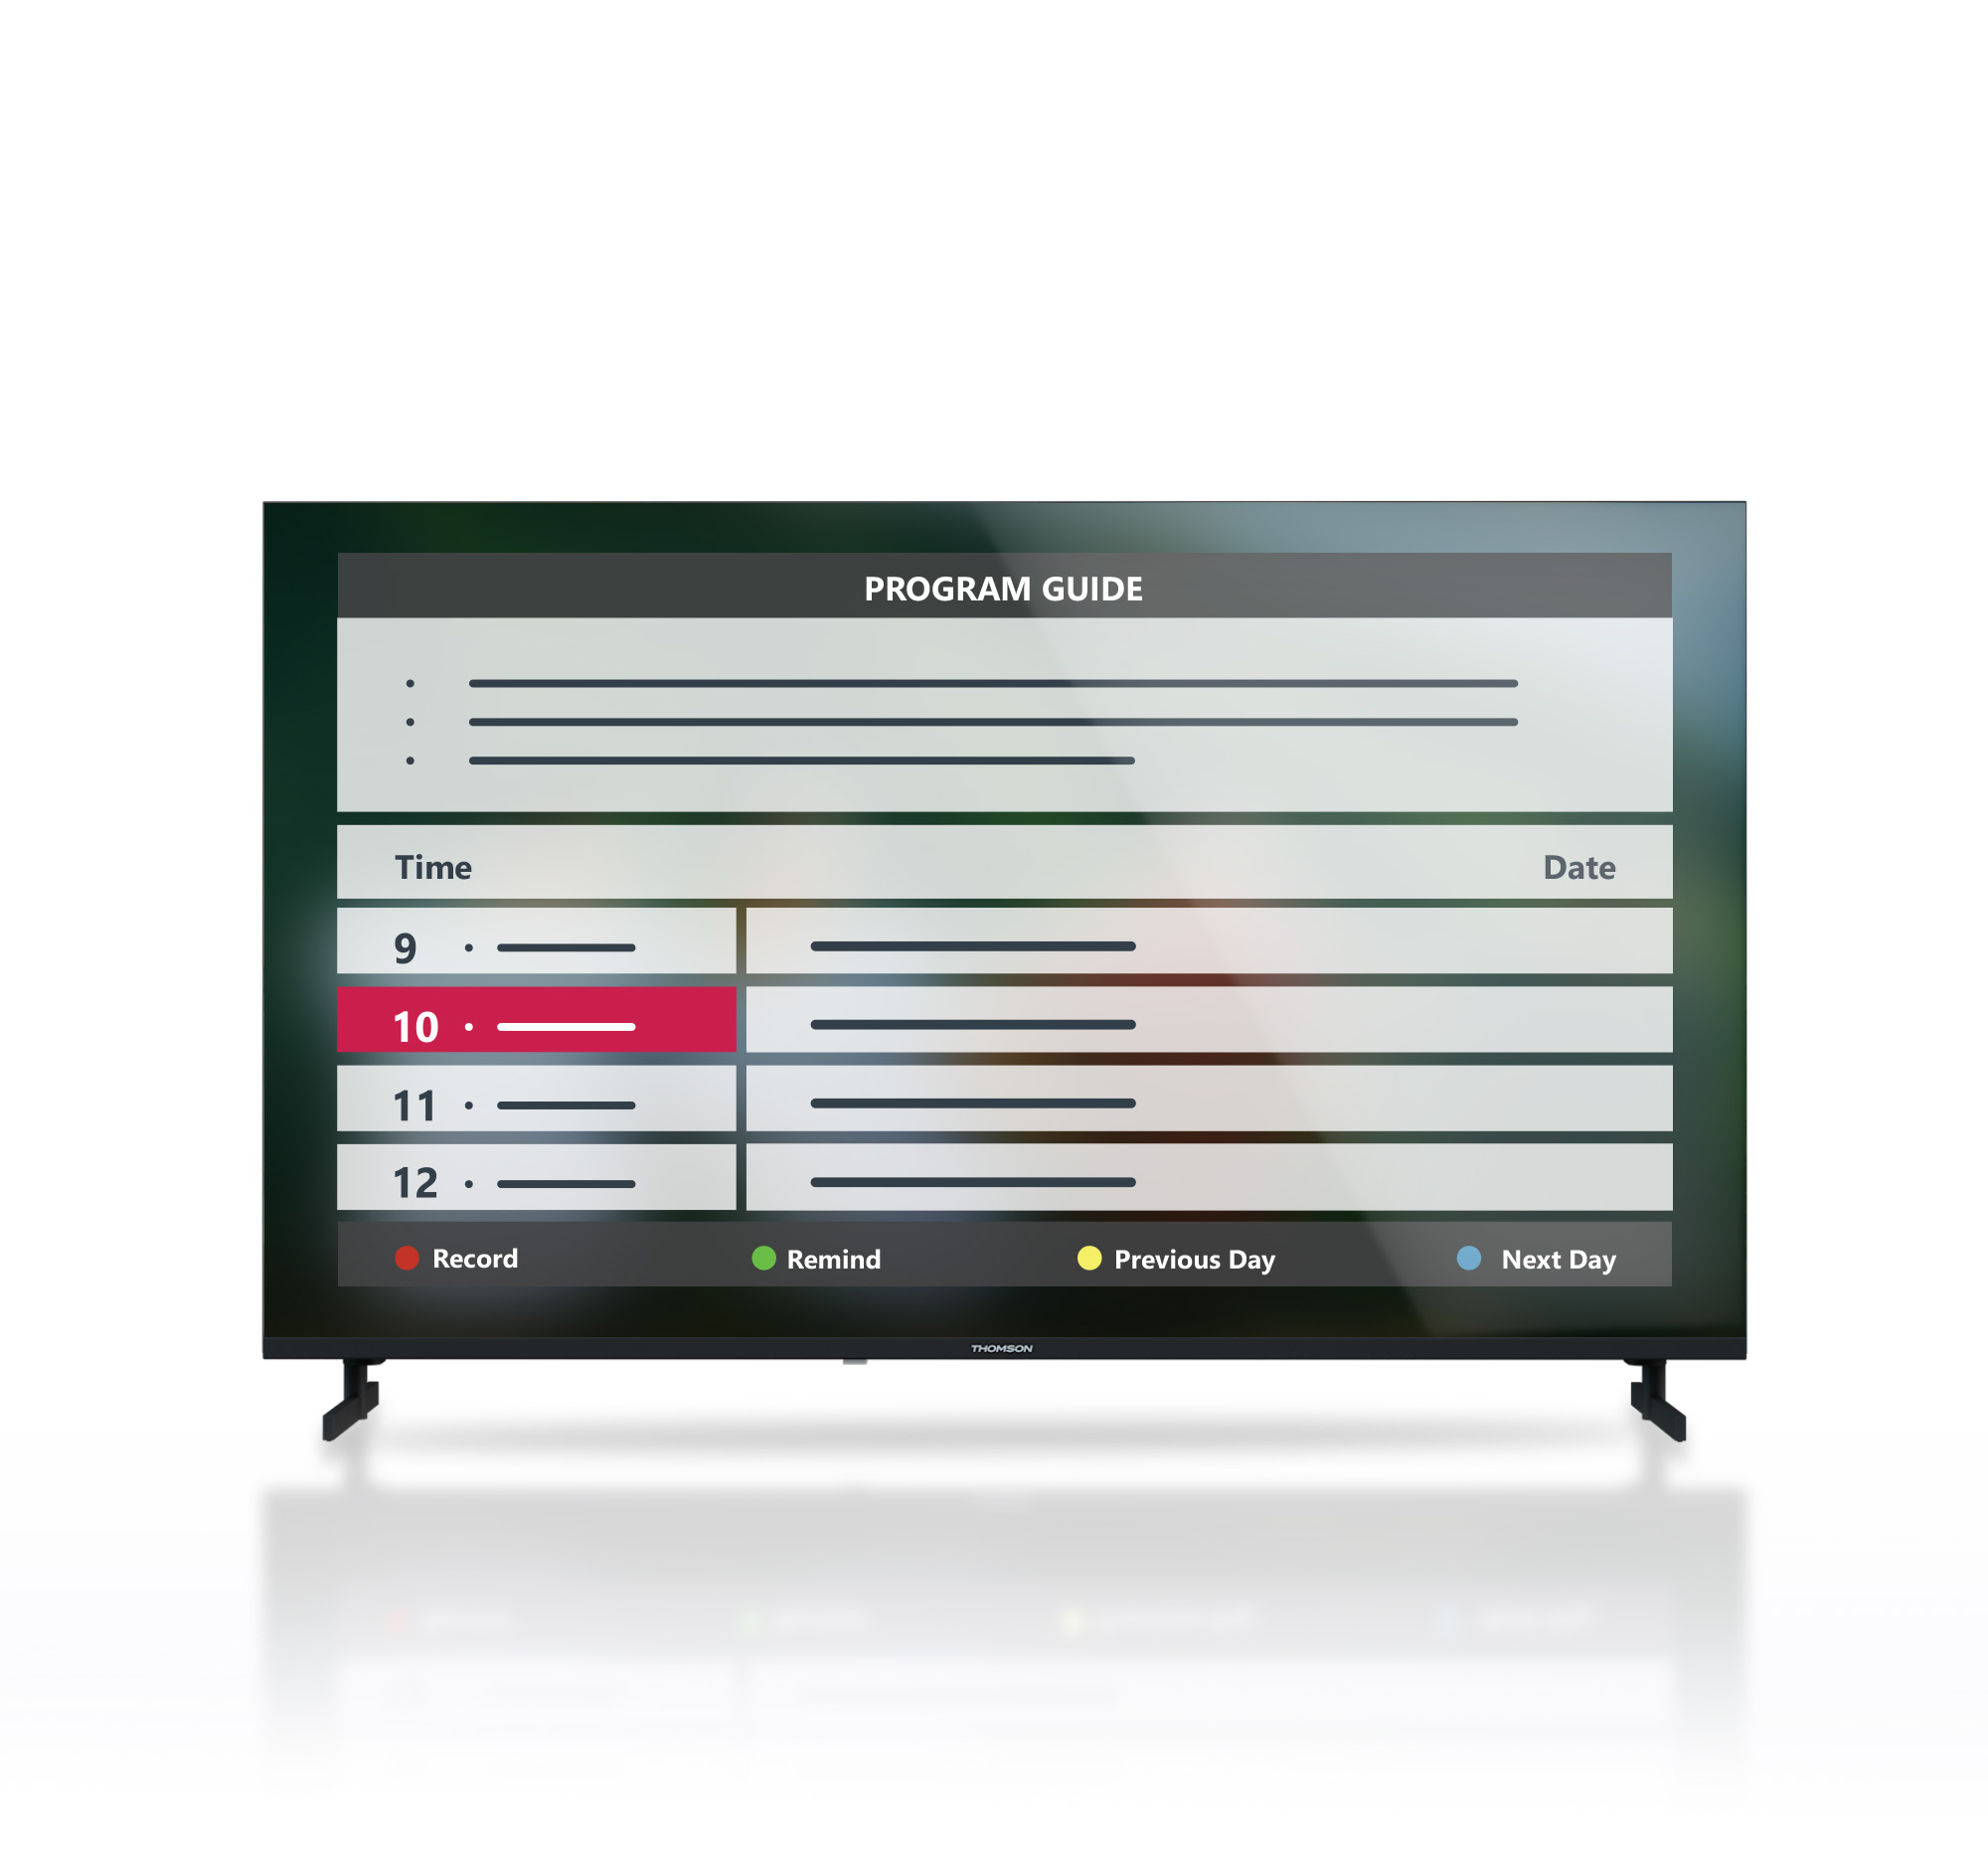 TV Portátil LED 24 12/24V - THOMSON 24HA2S13C Compatible para caravanas y  camiones,, HD, Smart TV, DVB-T2 (H.265), Negro